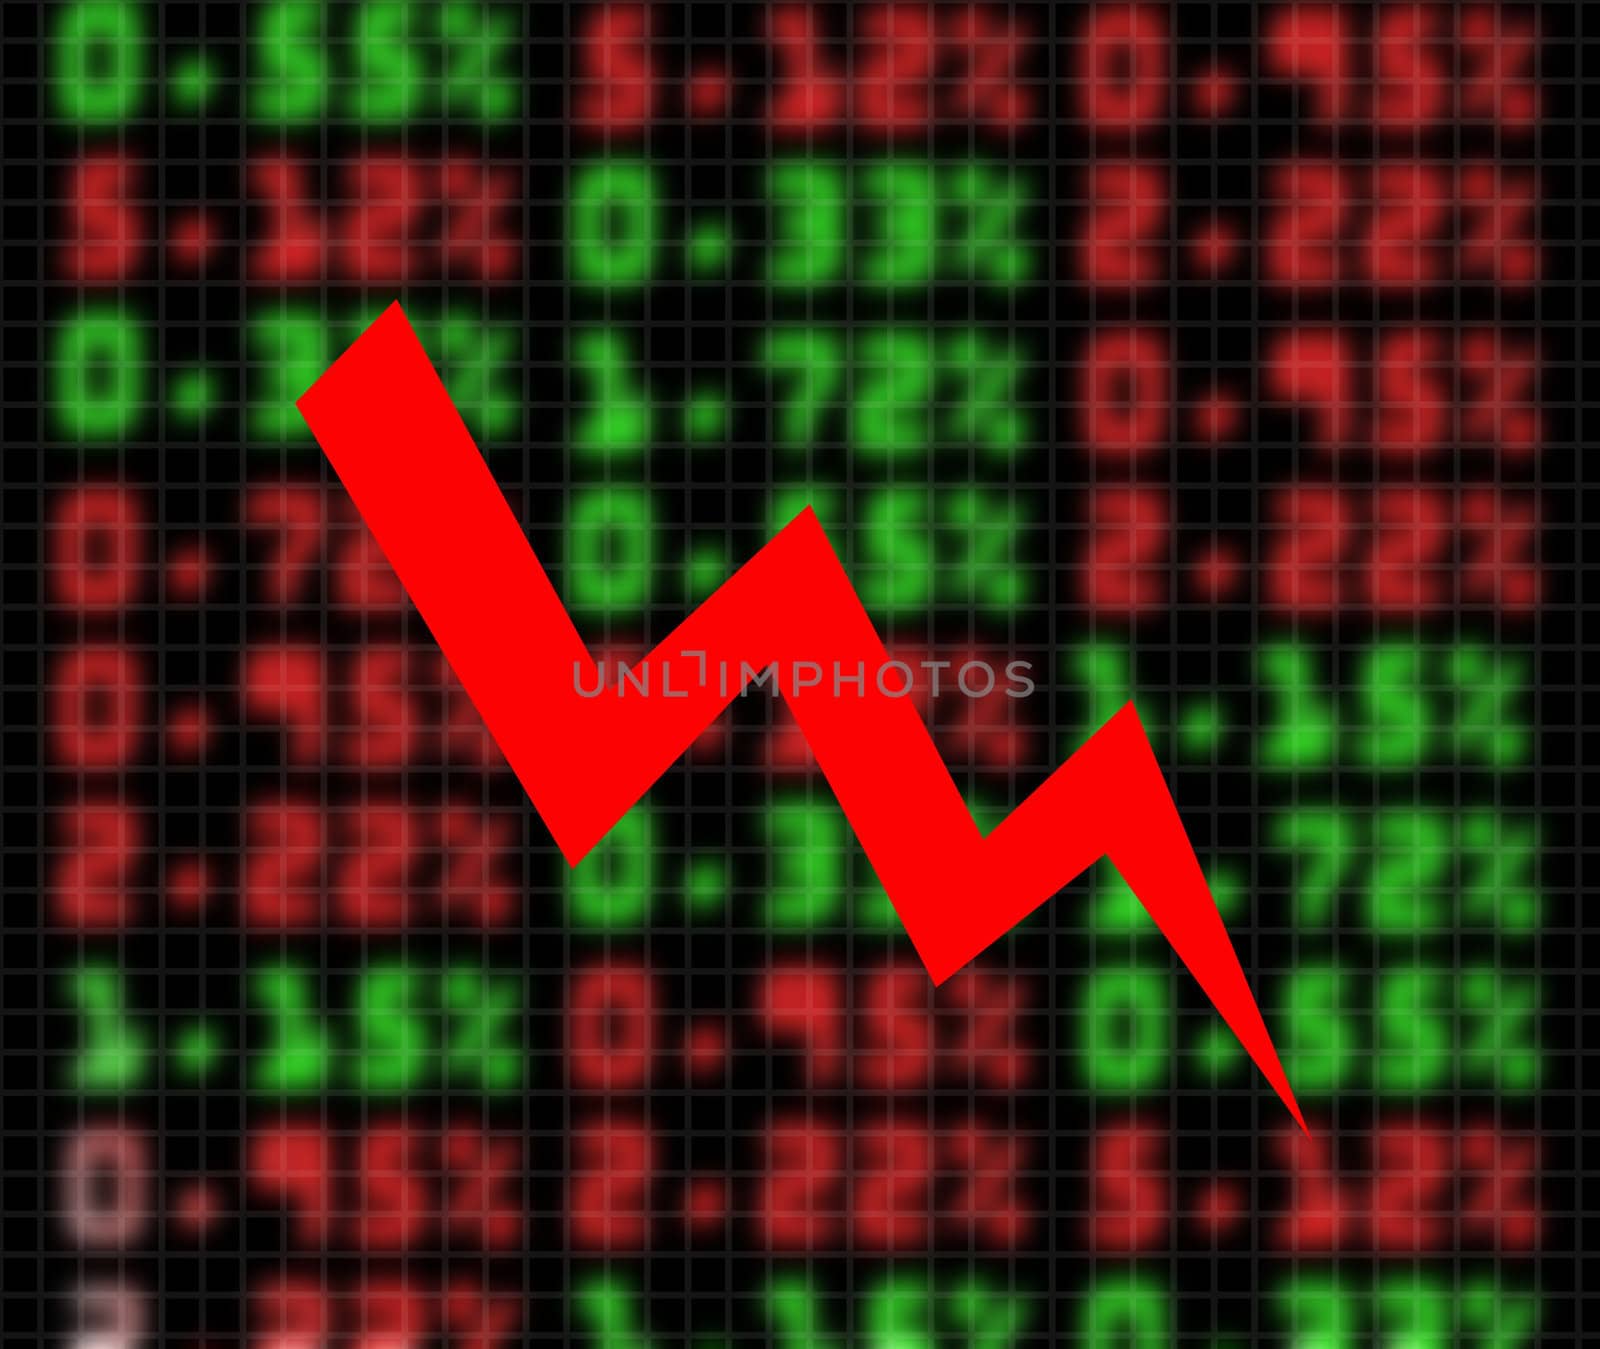 illustration of stock market exchange going down